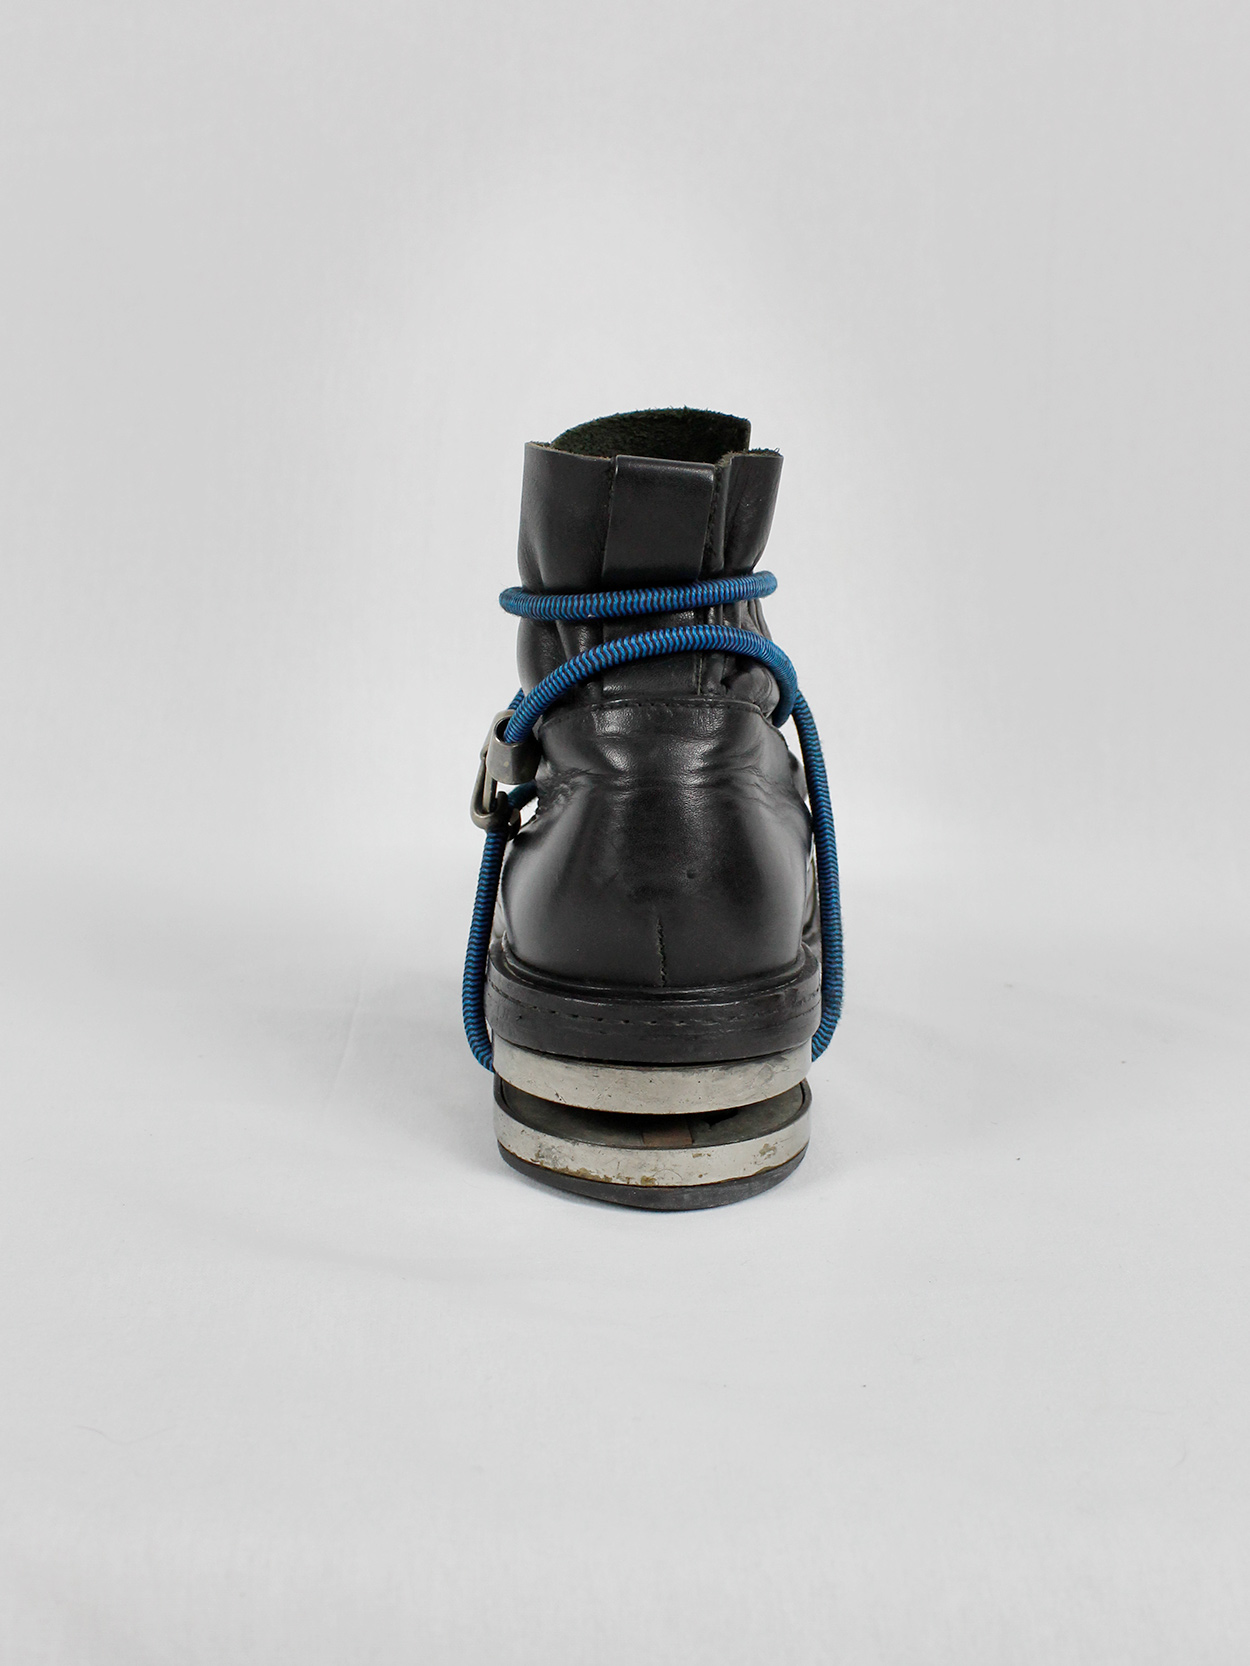 vaniitas Dirk Bikkembergs black mountaineering boots with metal heel and elastics fall 1996 (23)